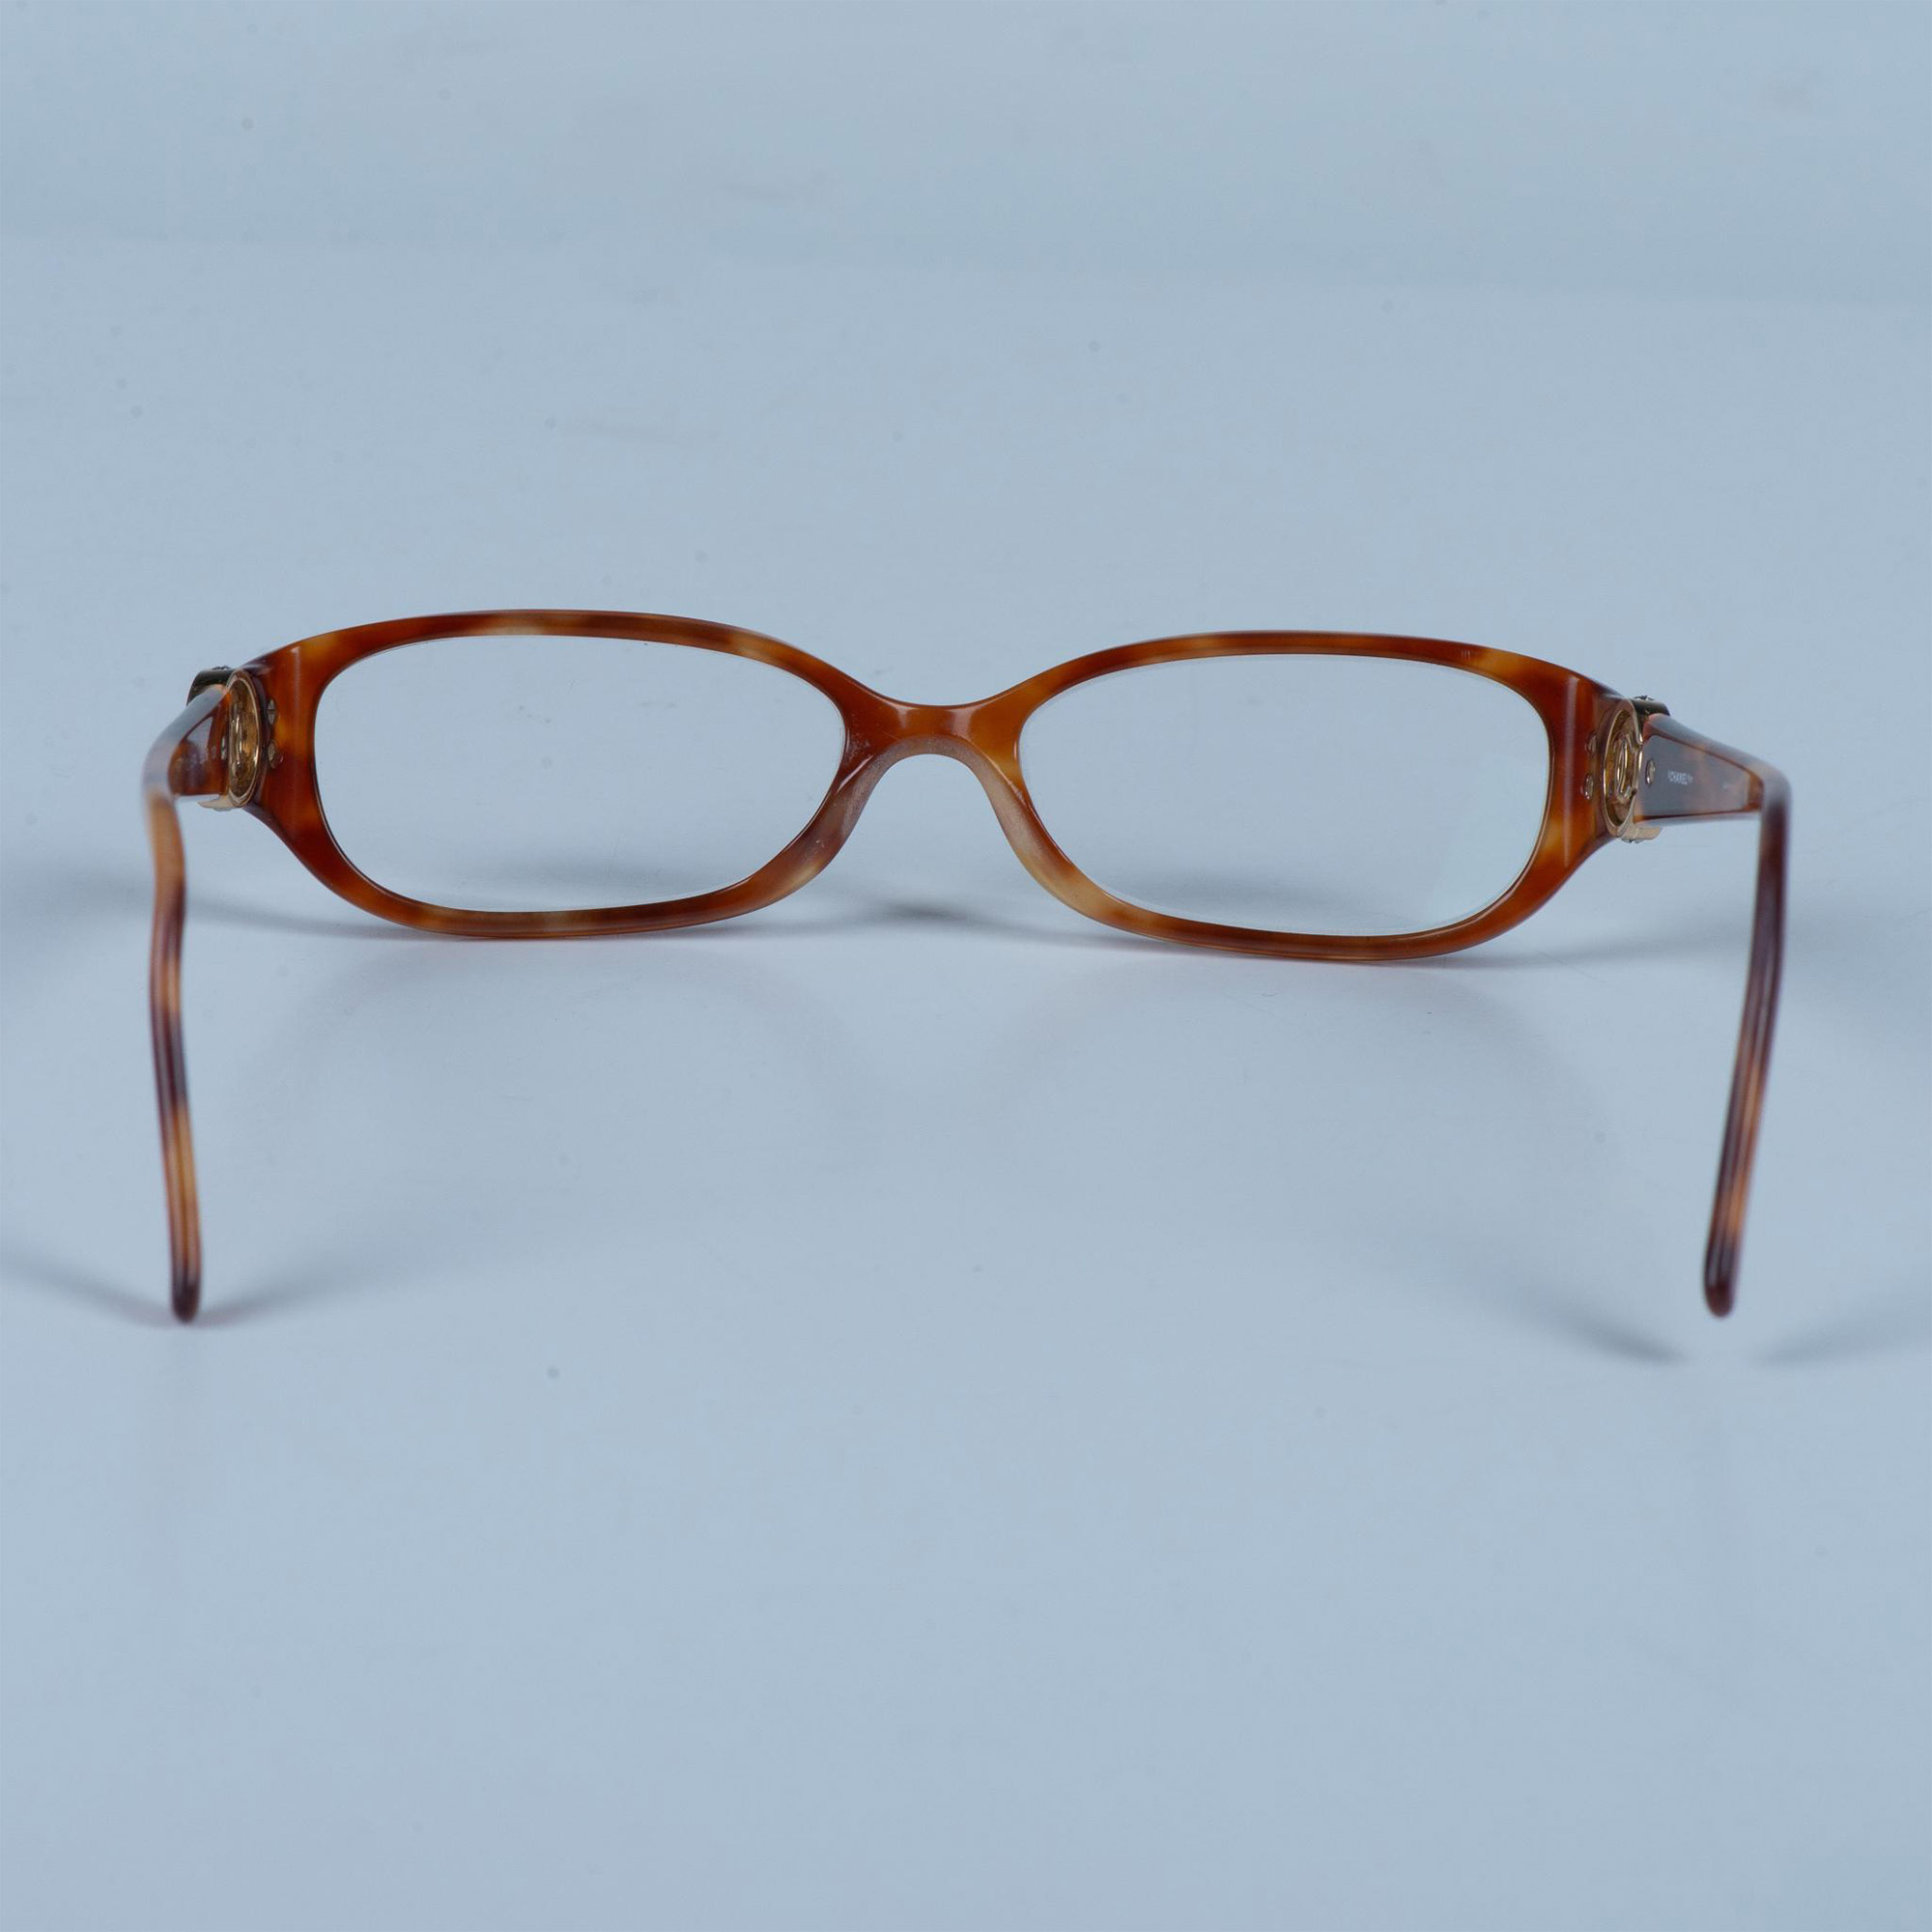 Chanel Eyeglass Frame - Image 3 of 8